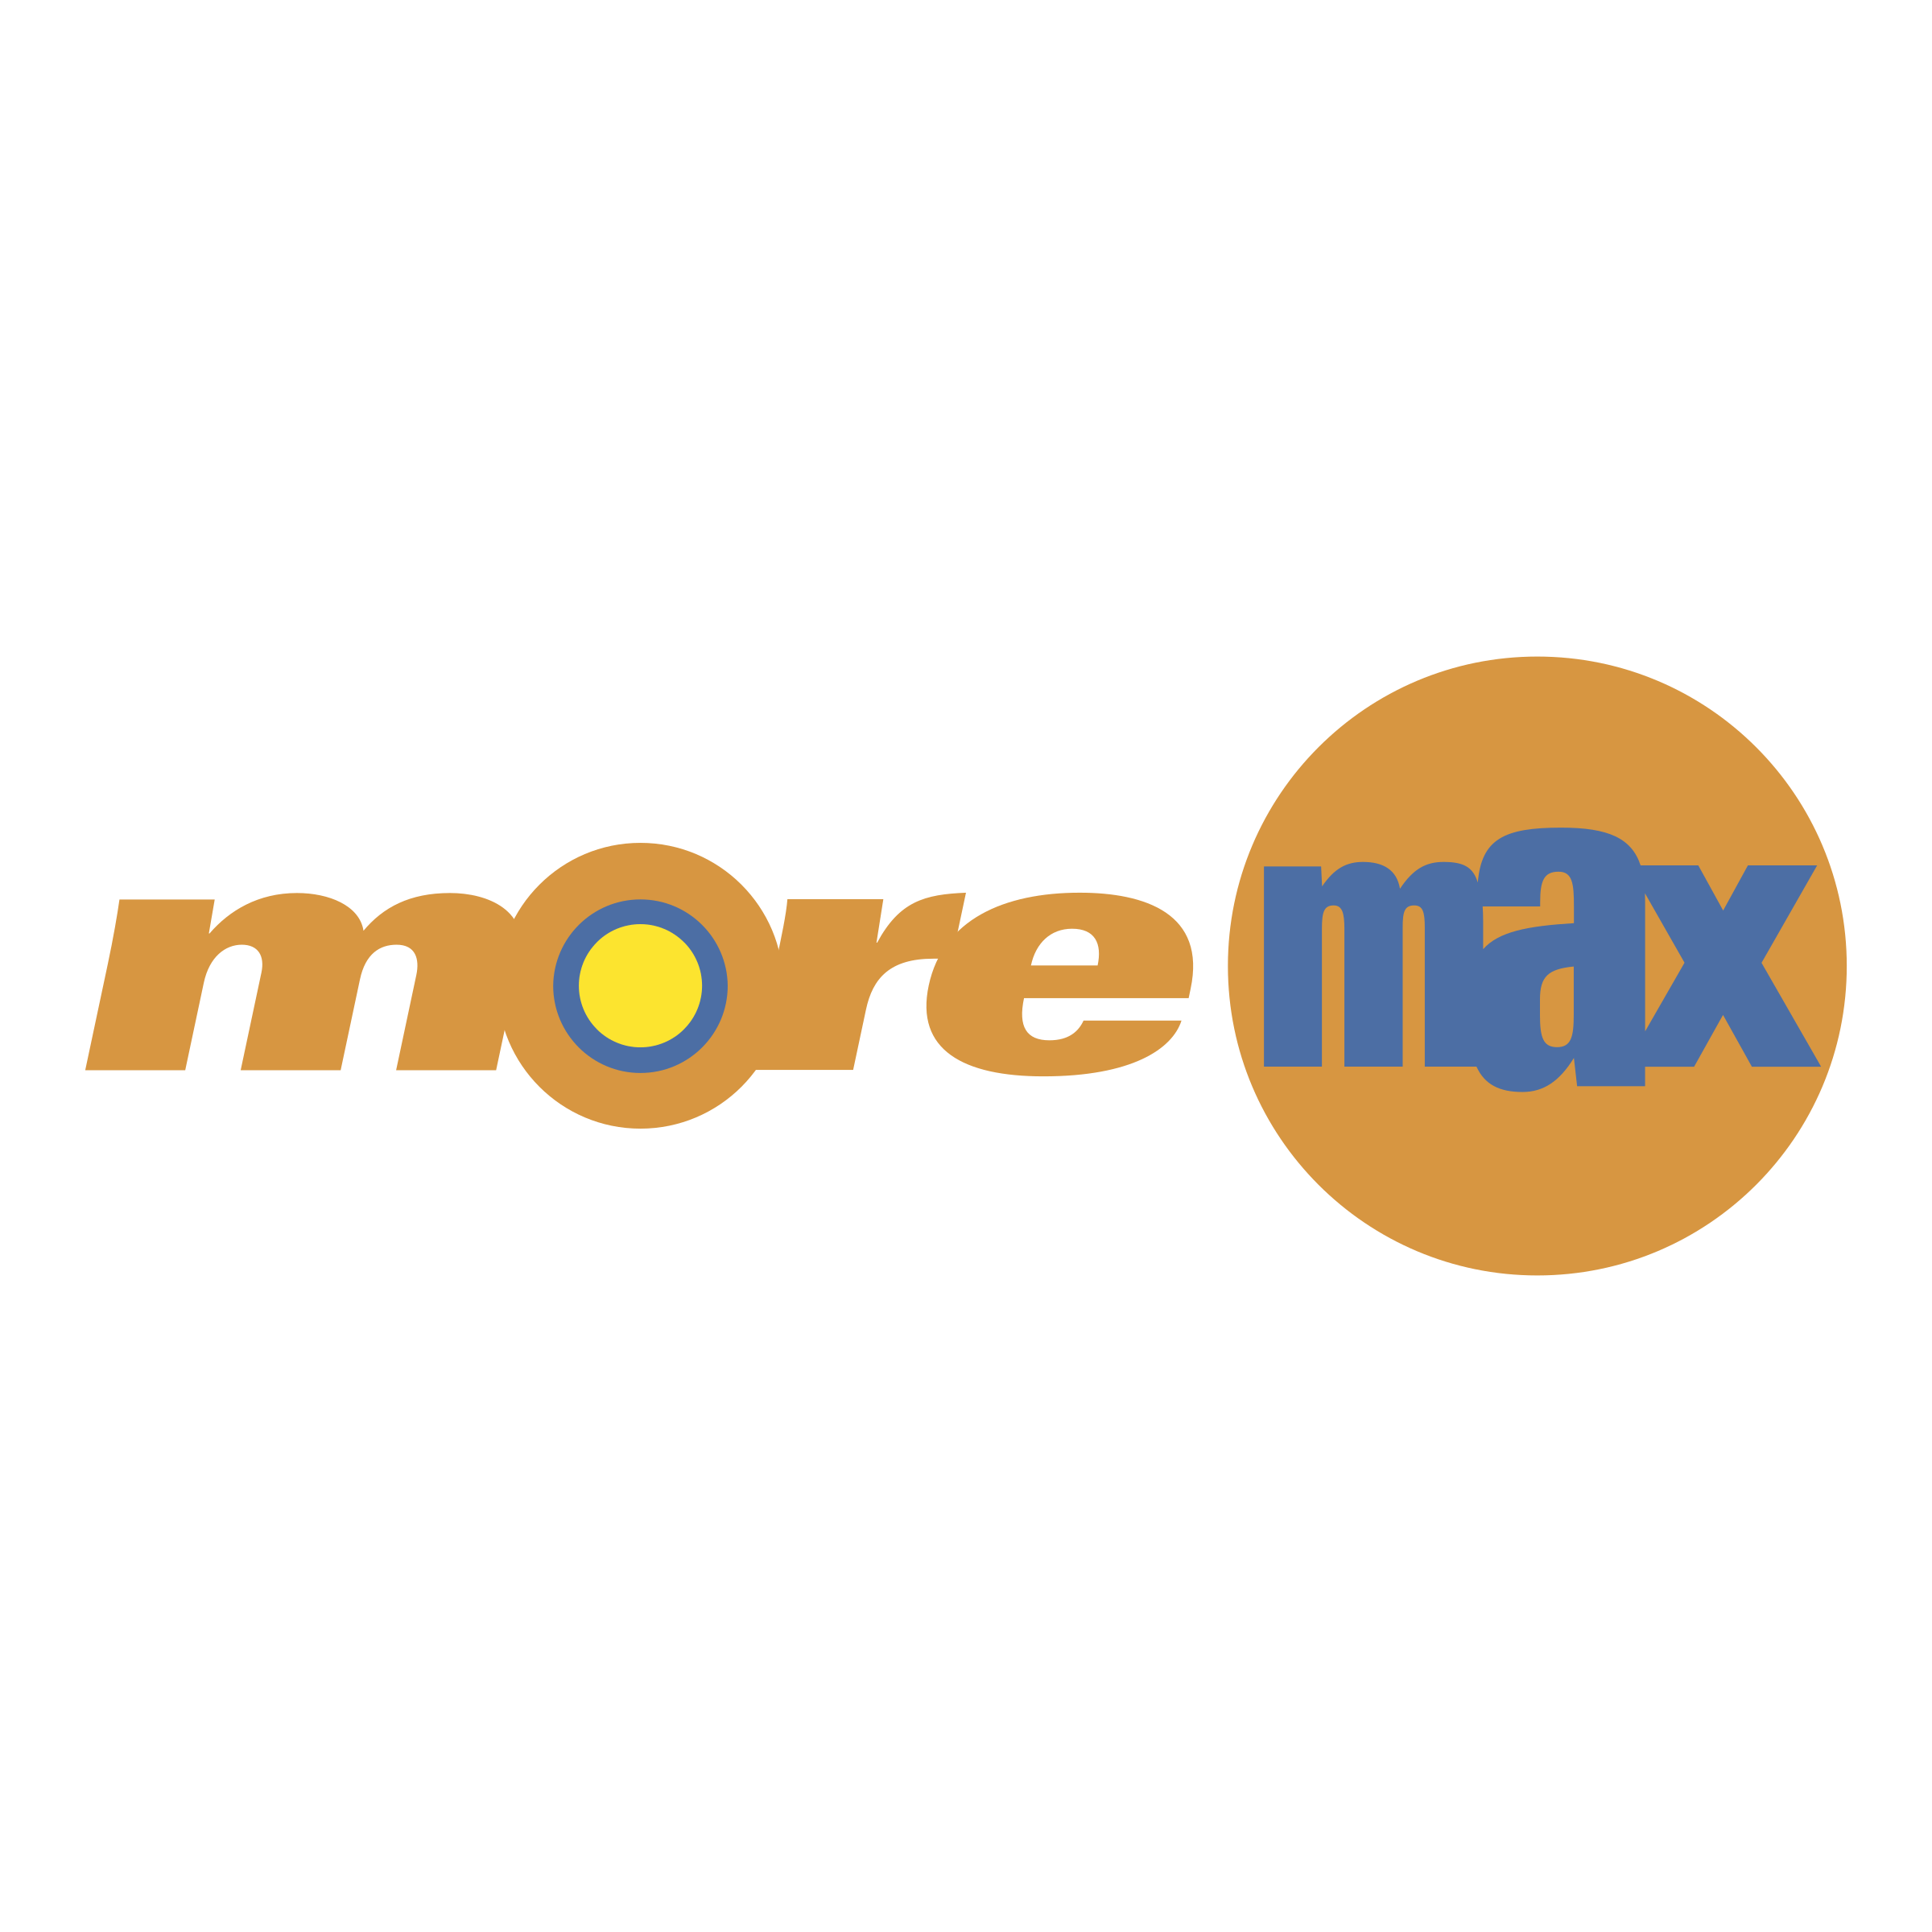 MoreMax Logo - More max Logo PNG Transparent & SVG Vector